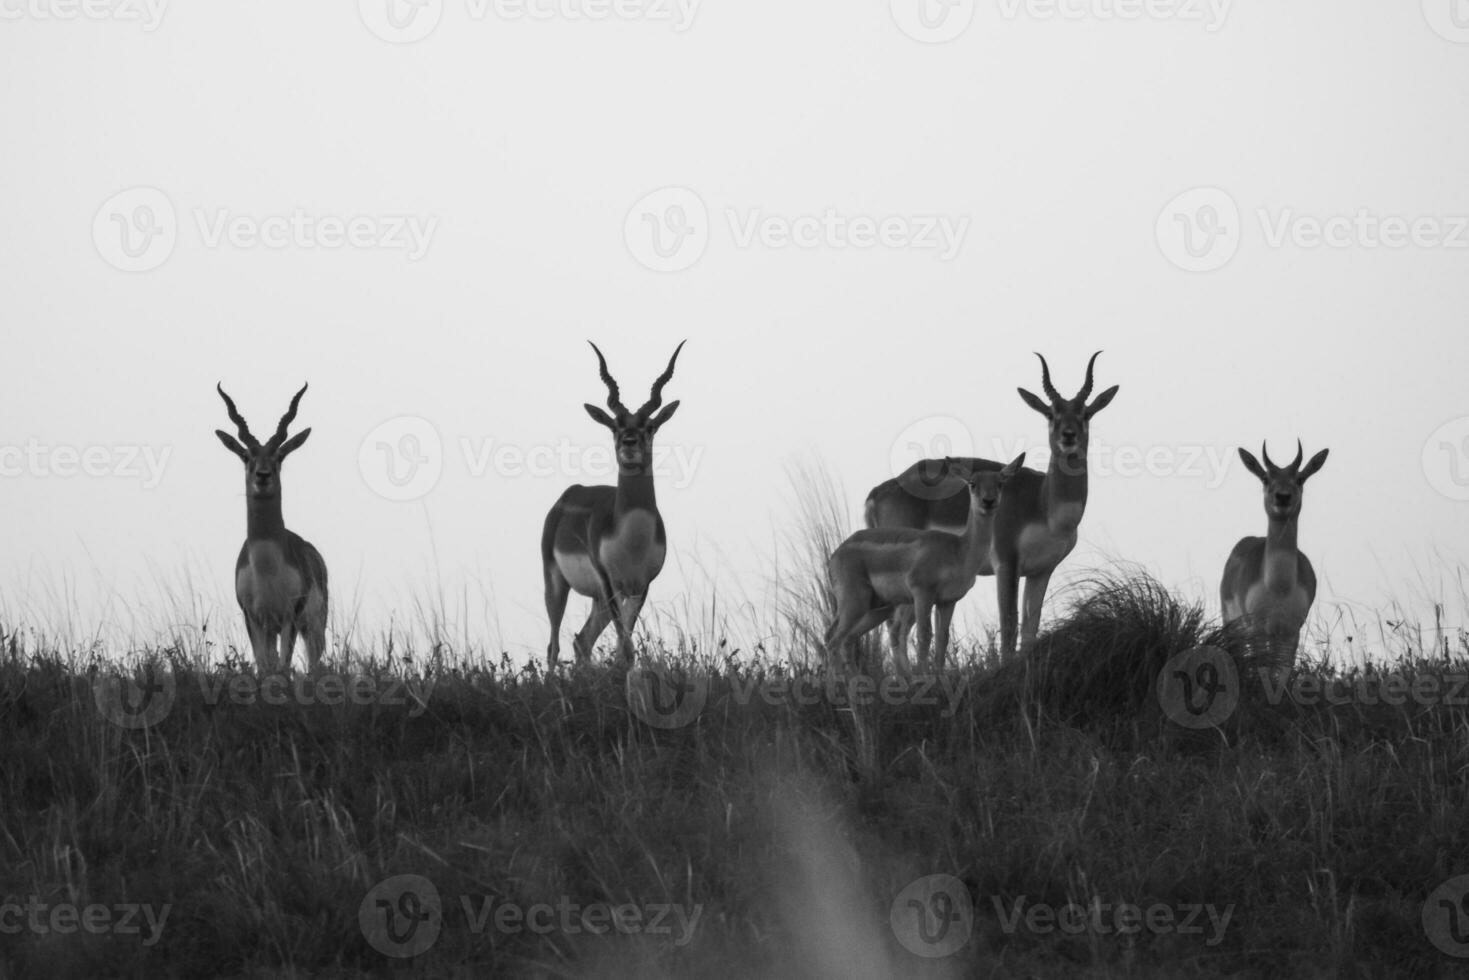 blackbuck antilop i pampas enkel miljö, la pampa provins, argentina foto